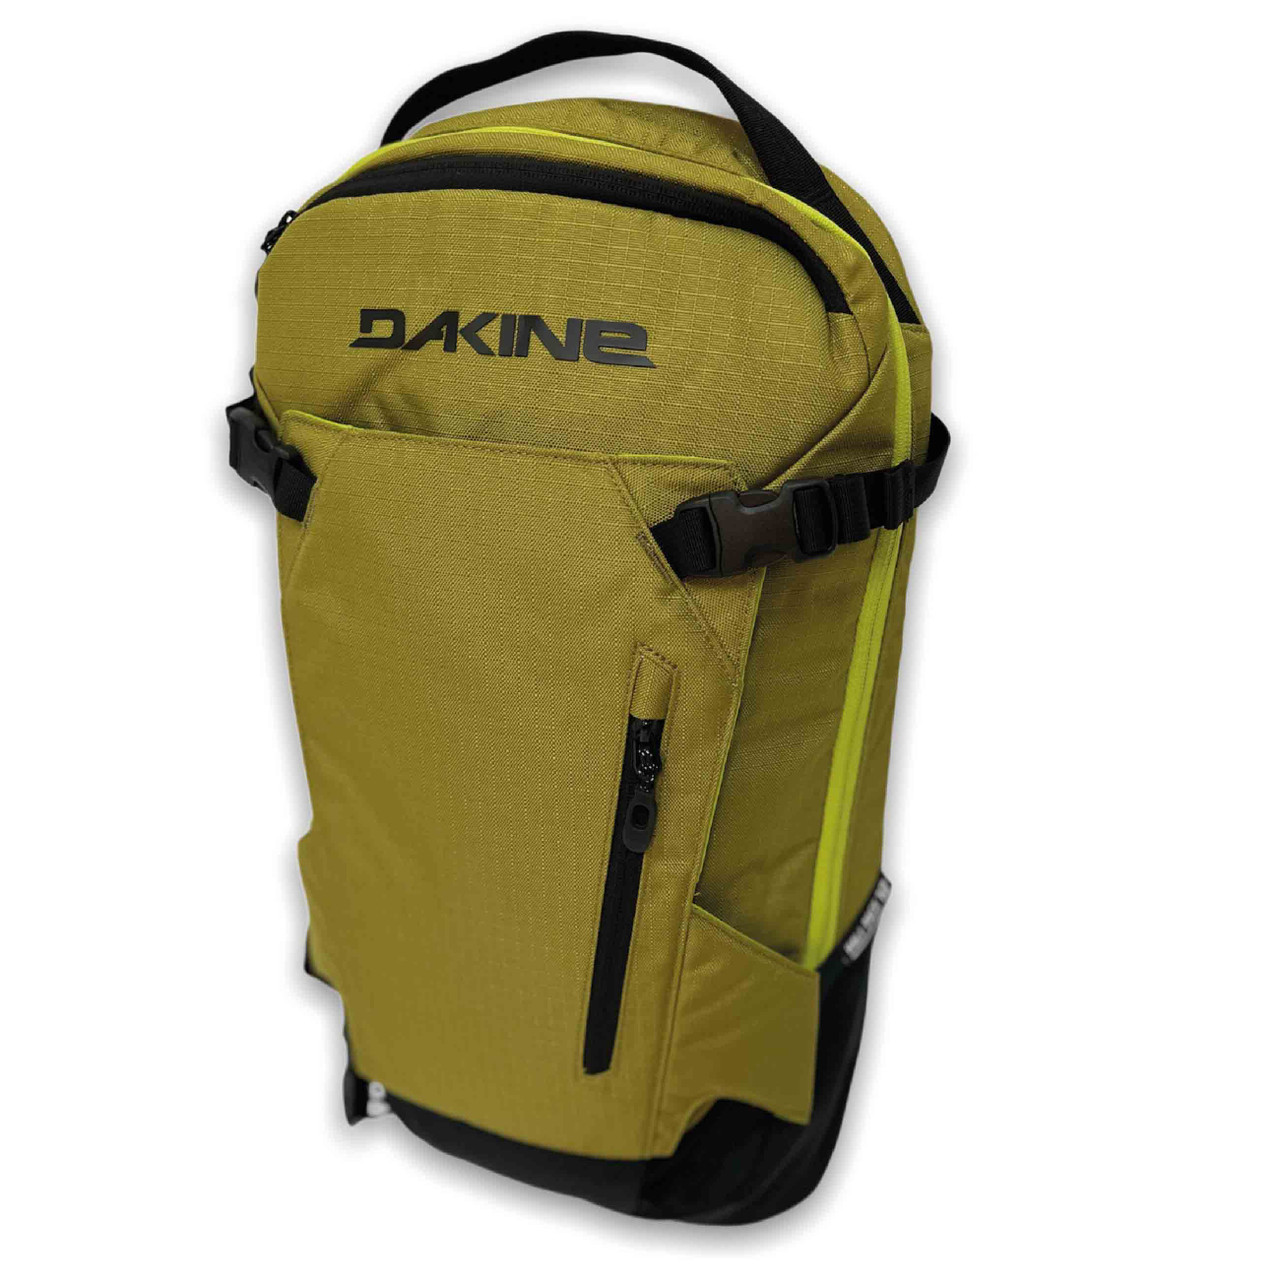 Dakine Heli Pack 12 Litre Ruck Sack Back Pack Green Moss - Hyped Sports